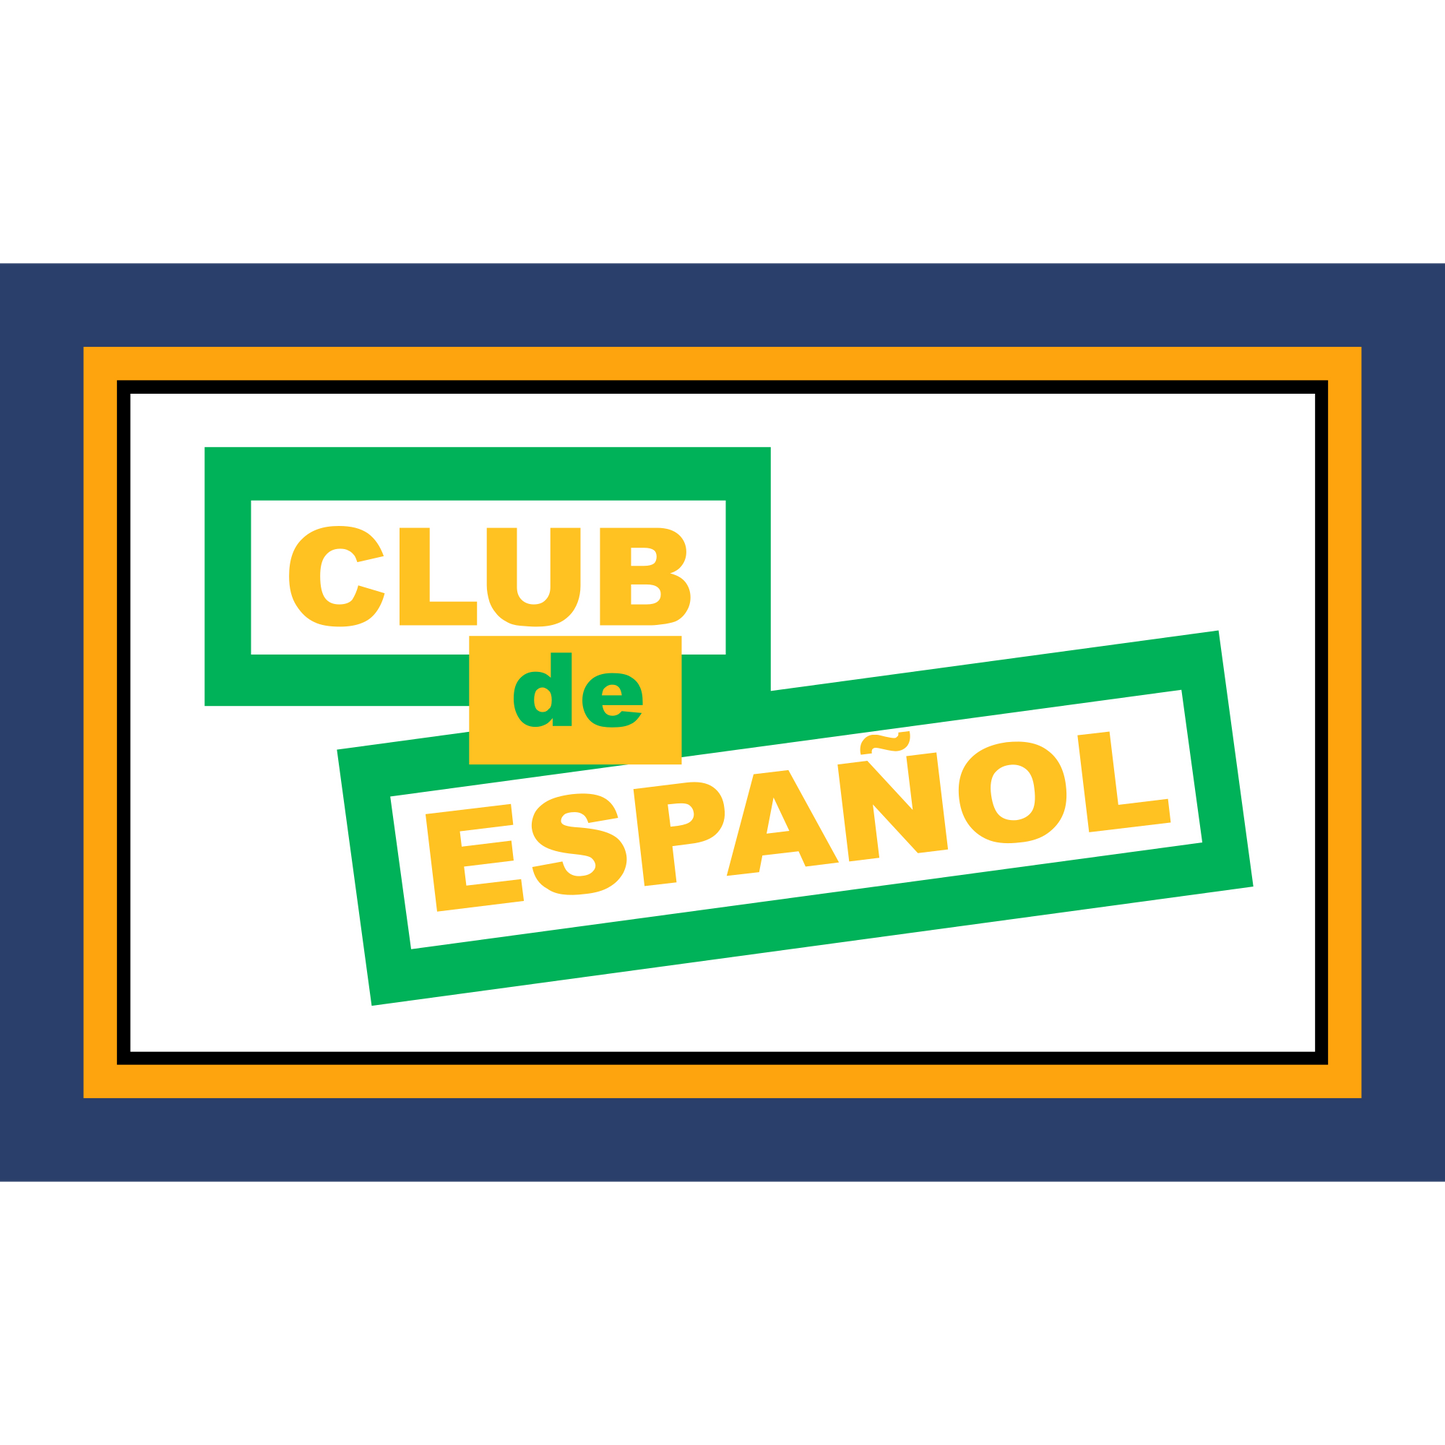 Spanish Club Sleeve Patch